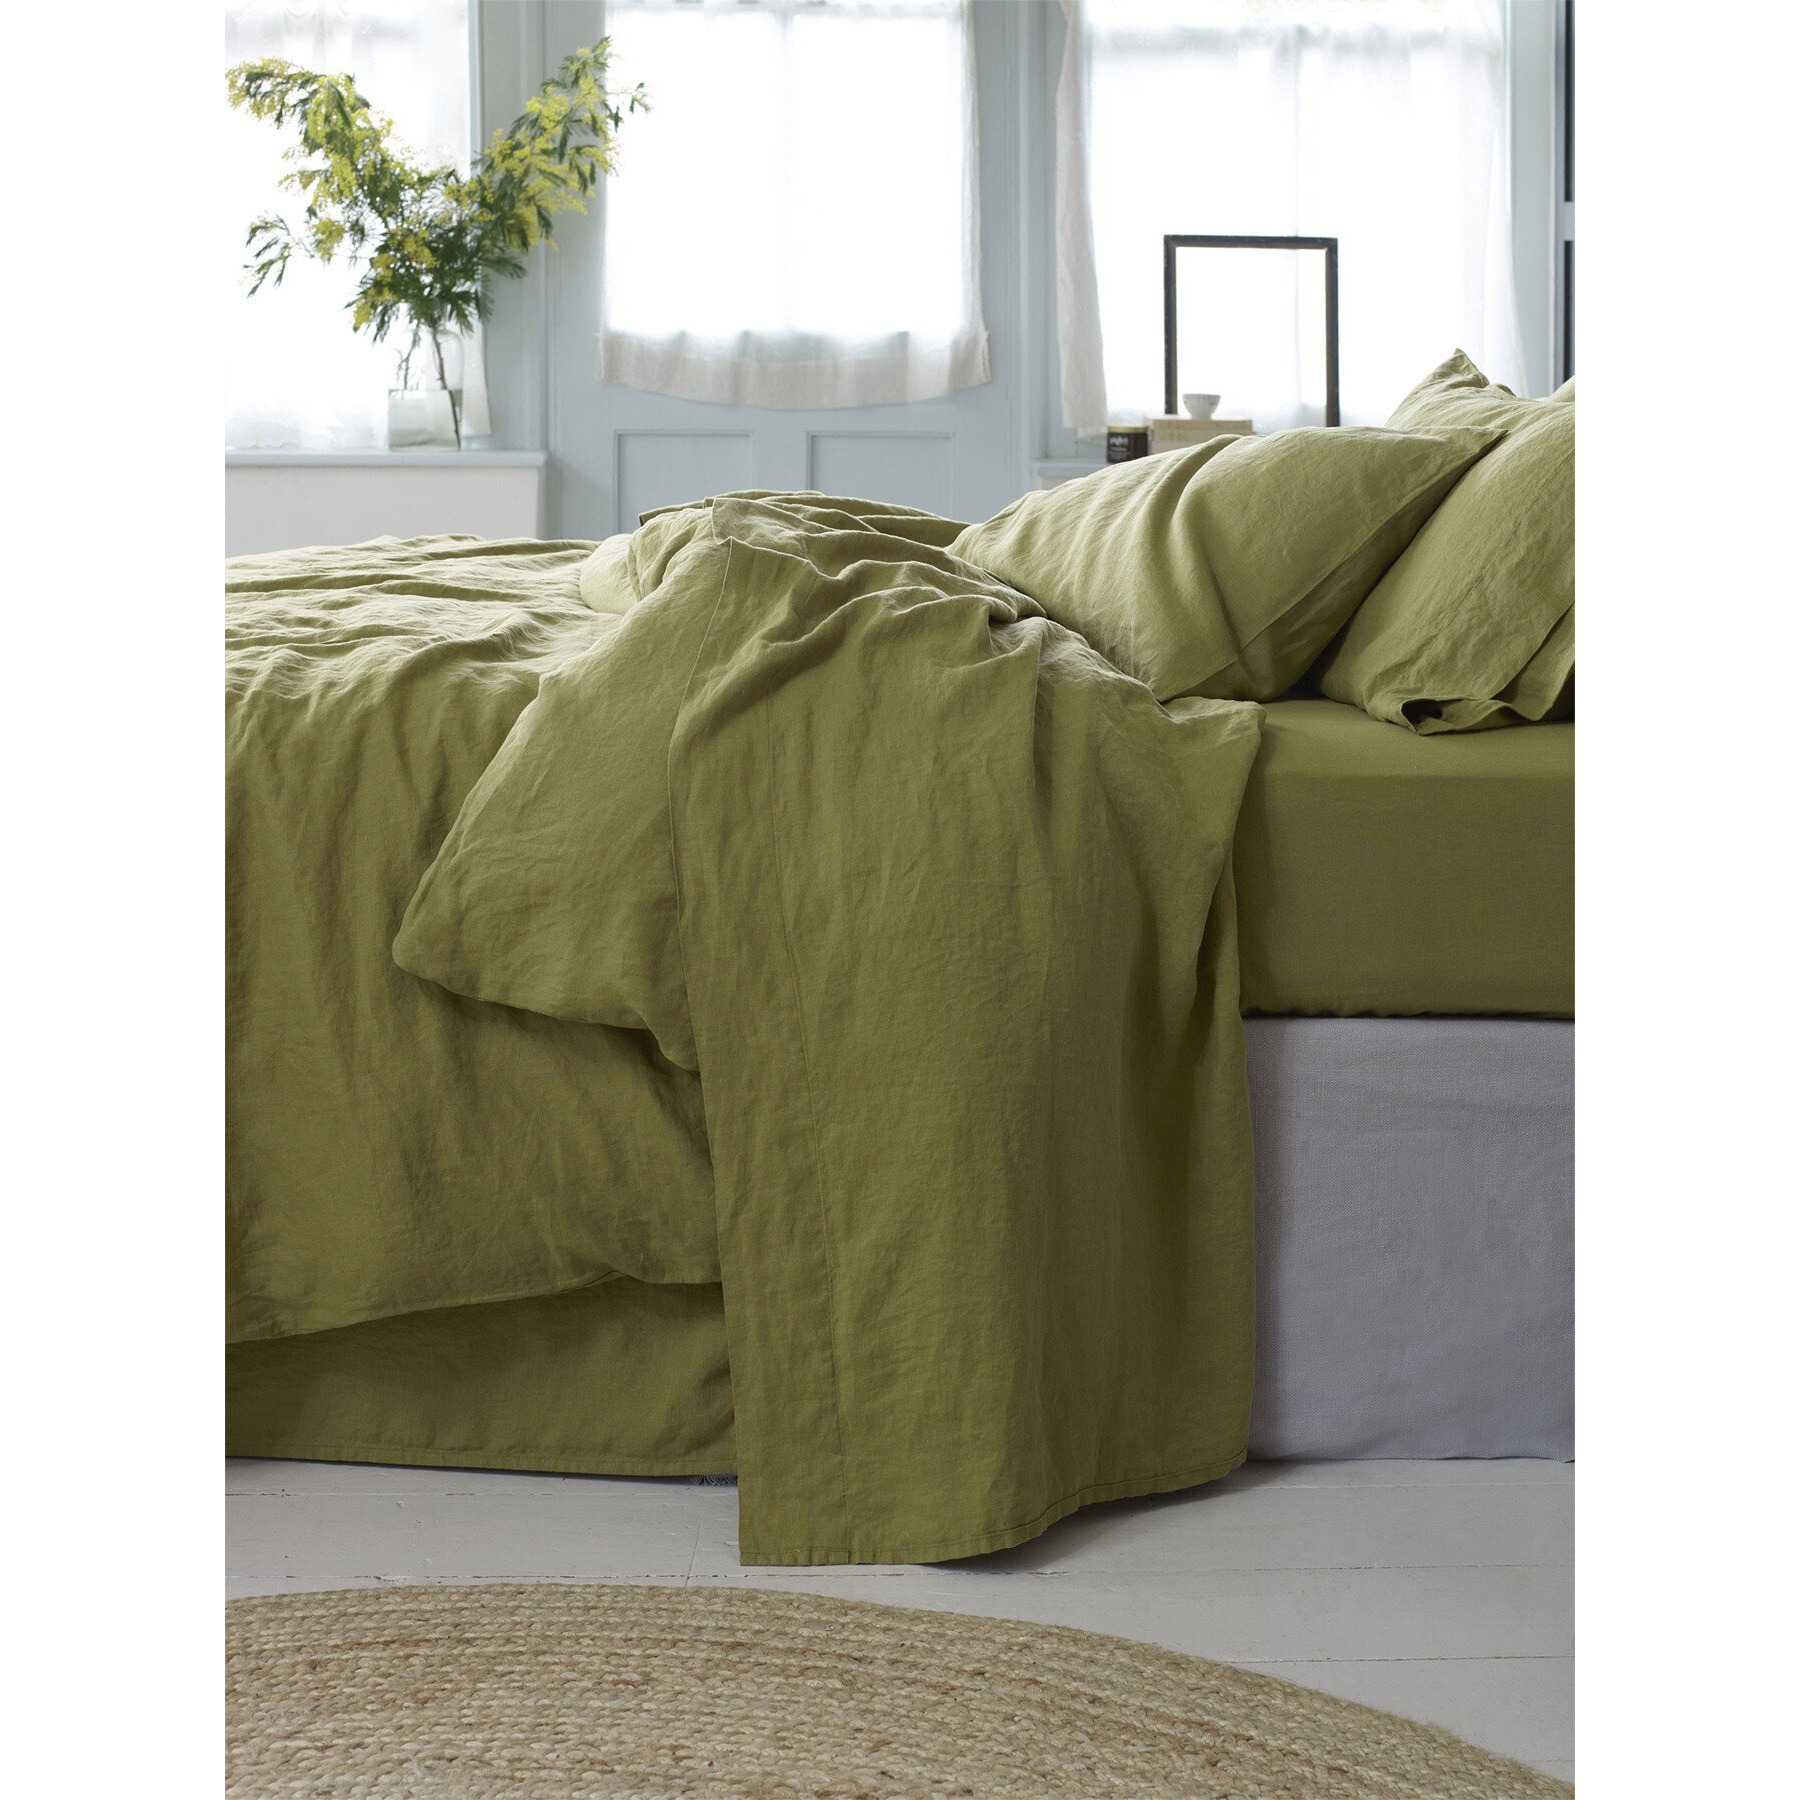 Piglet in Bed Linen Flat Sheet - Size Super King Green - image 1